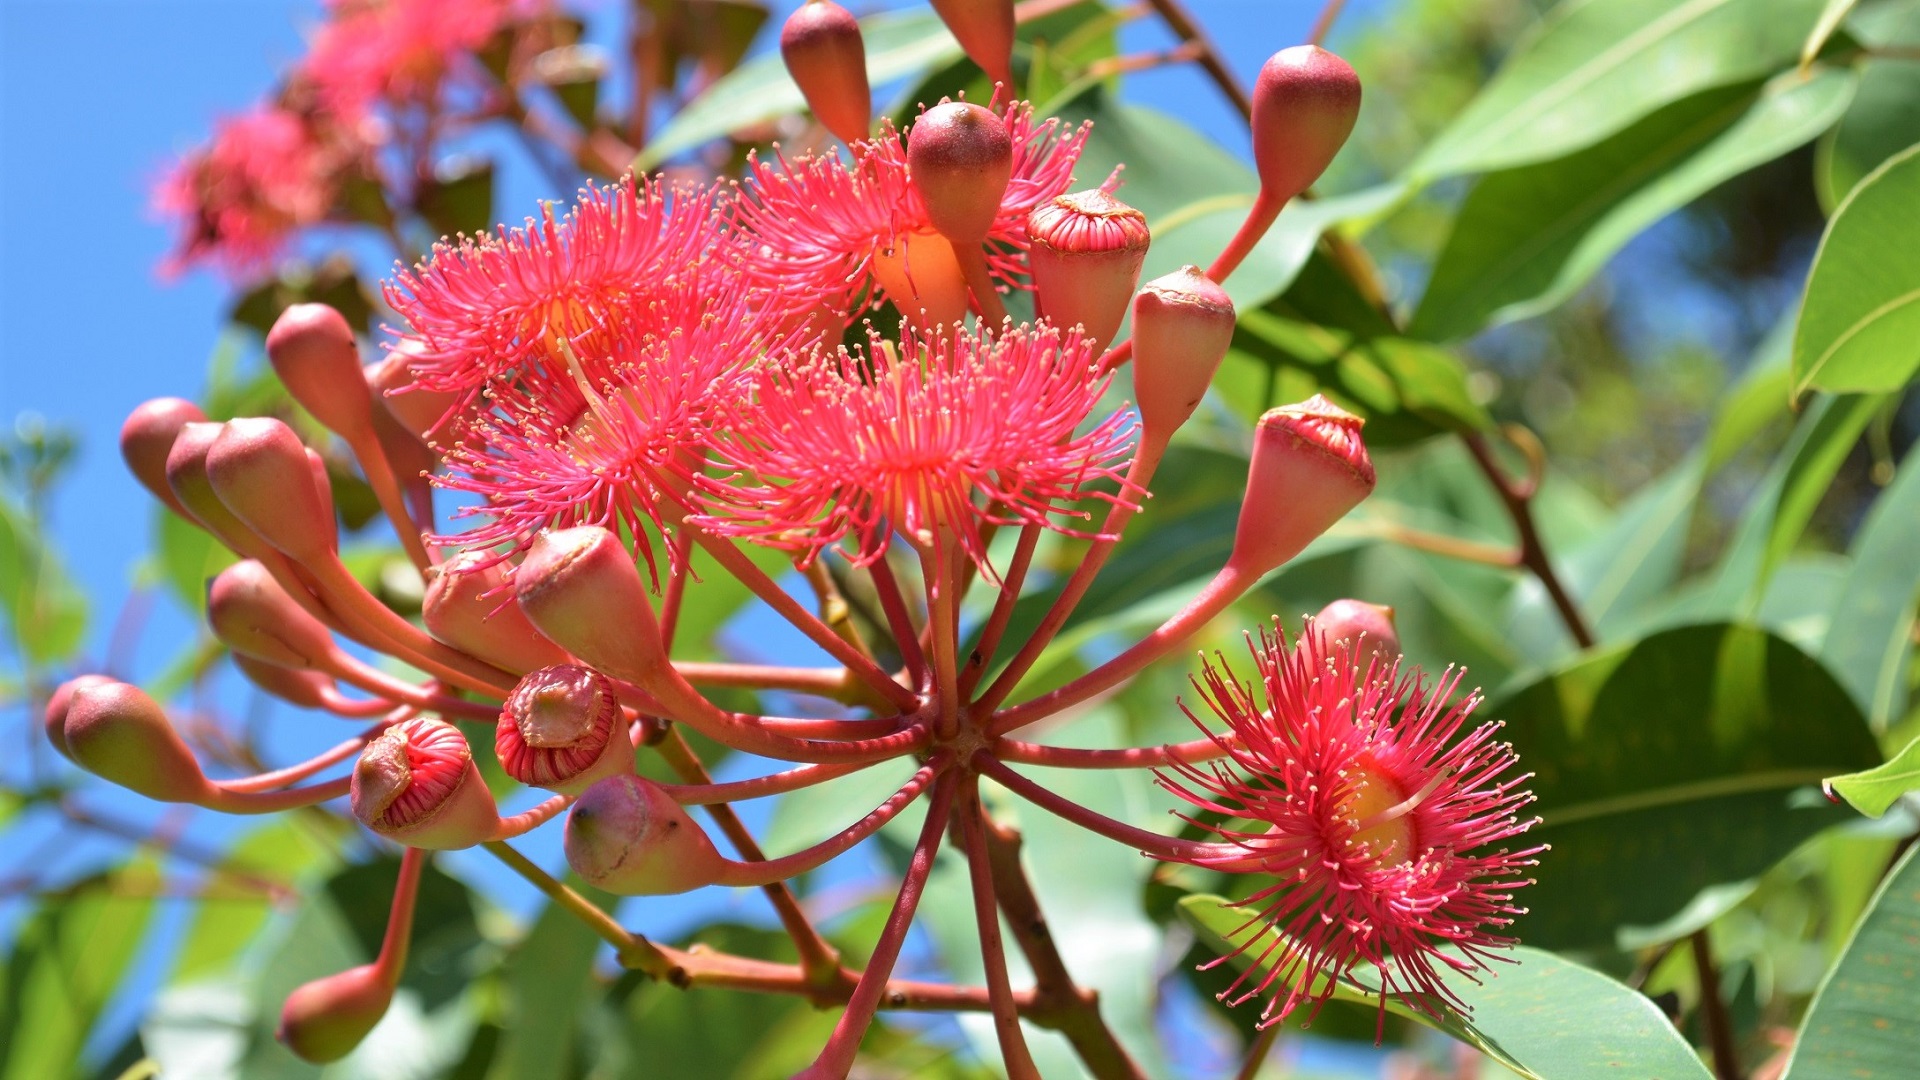 Red Flowering Gum - Corymbia Ficifolia, Native Australian Tree by lonewolf6738